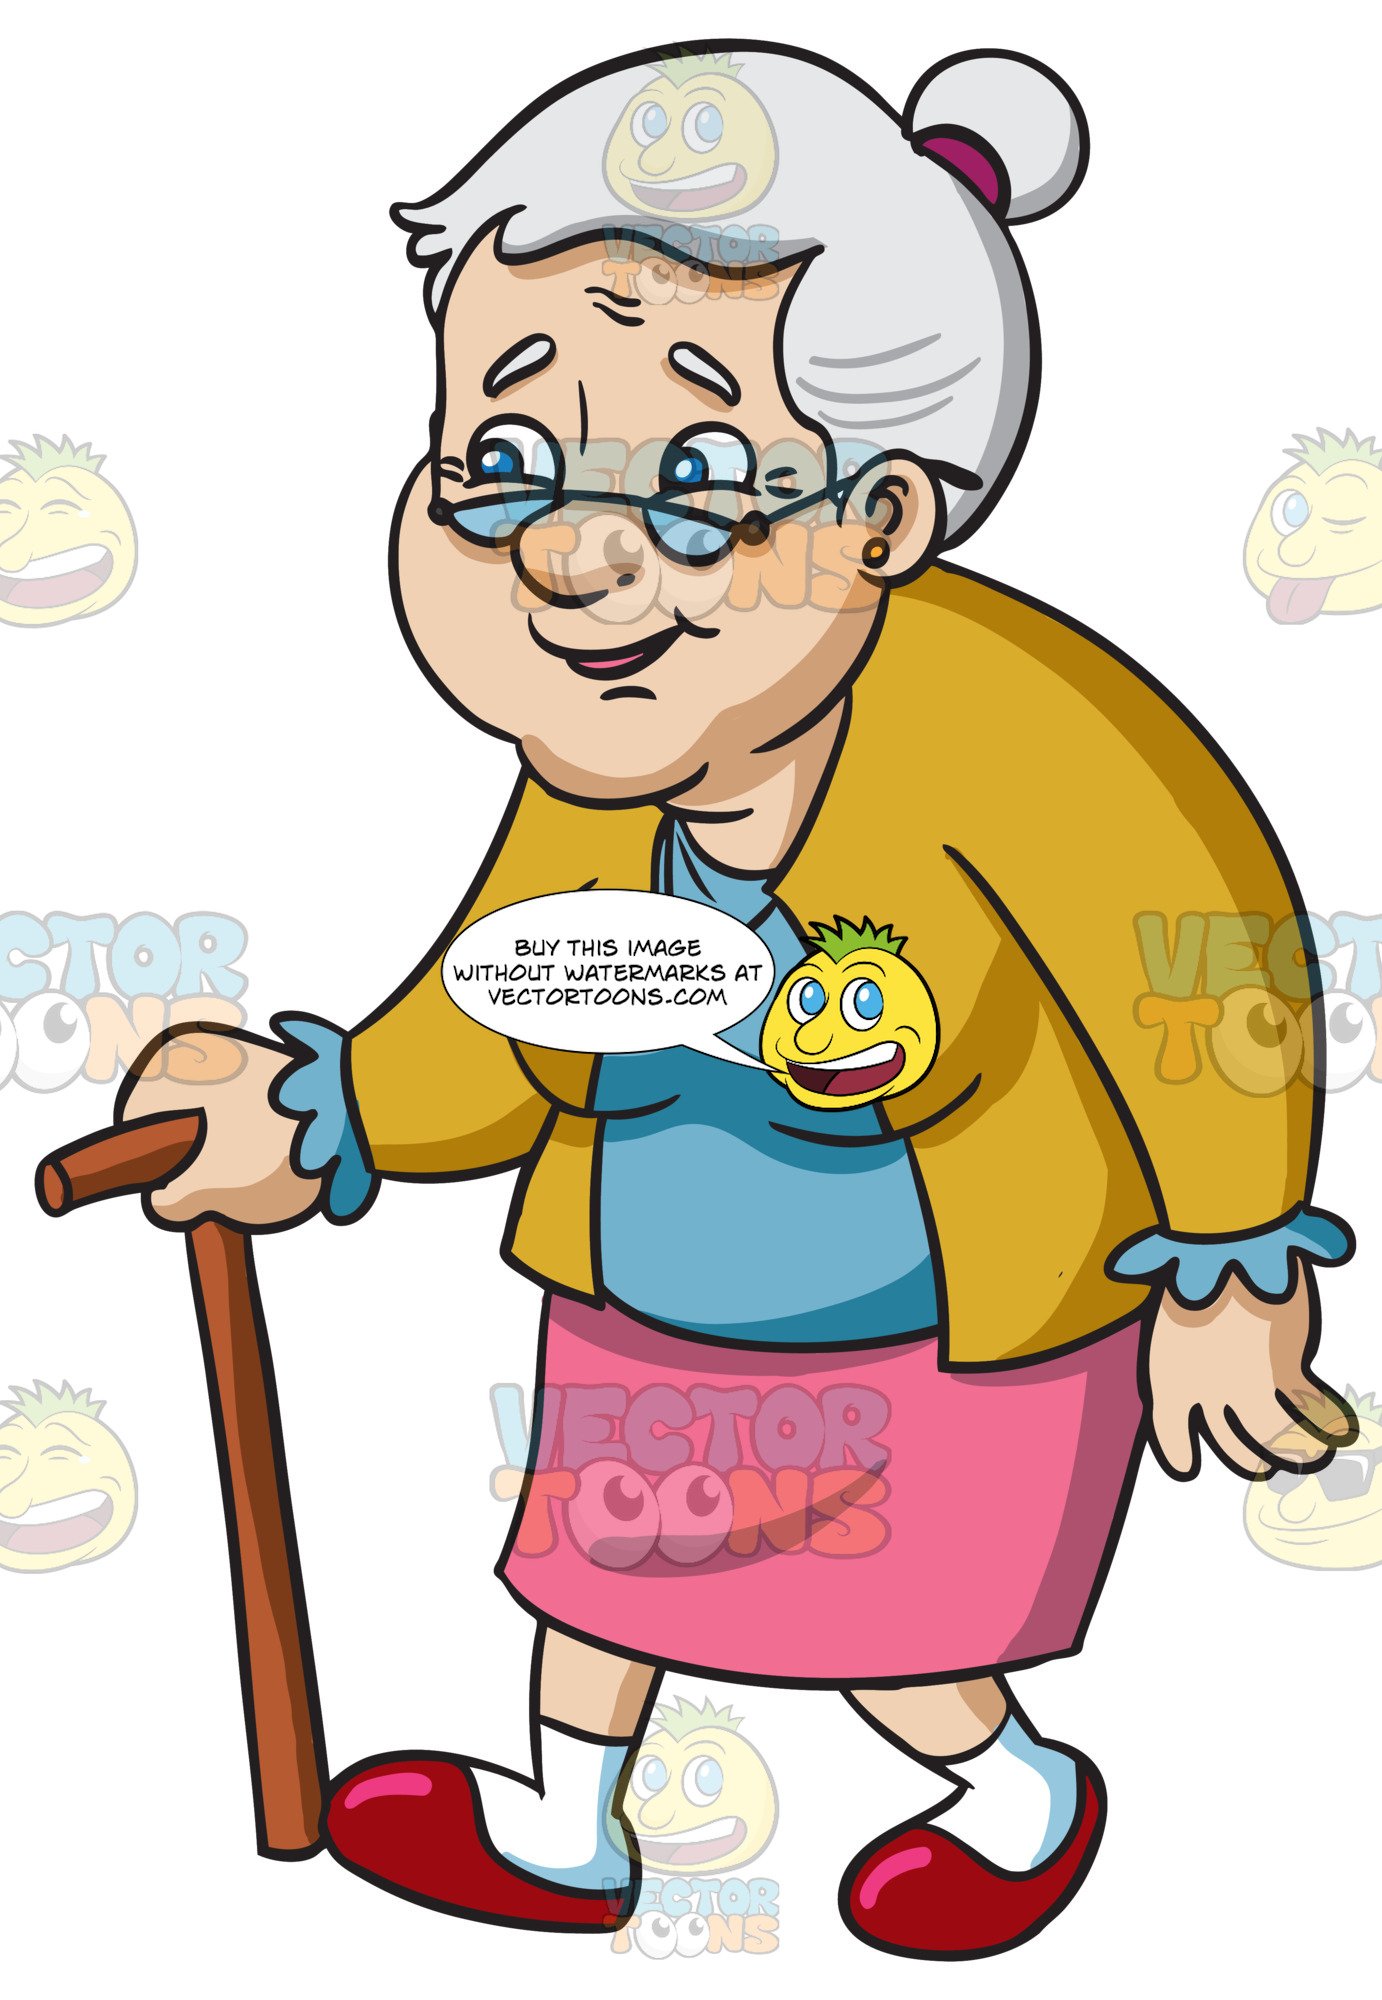 A Smiling Female Senior Citizen With Glasses.